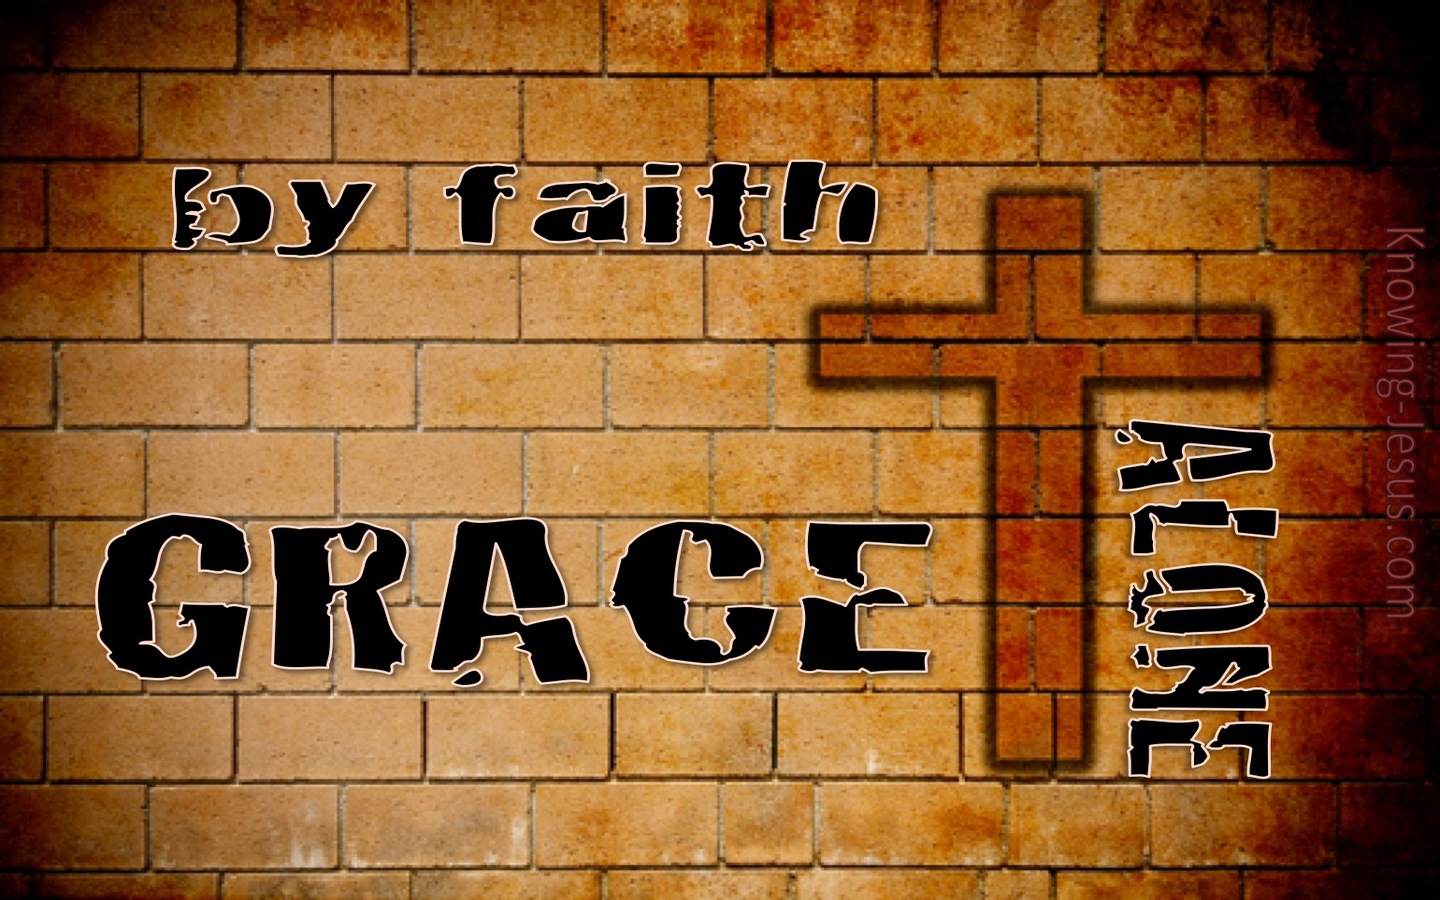 Ephesians 2:8 Grace Through Faith (brown)